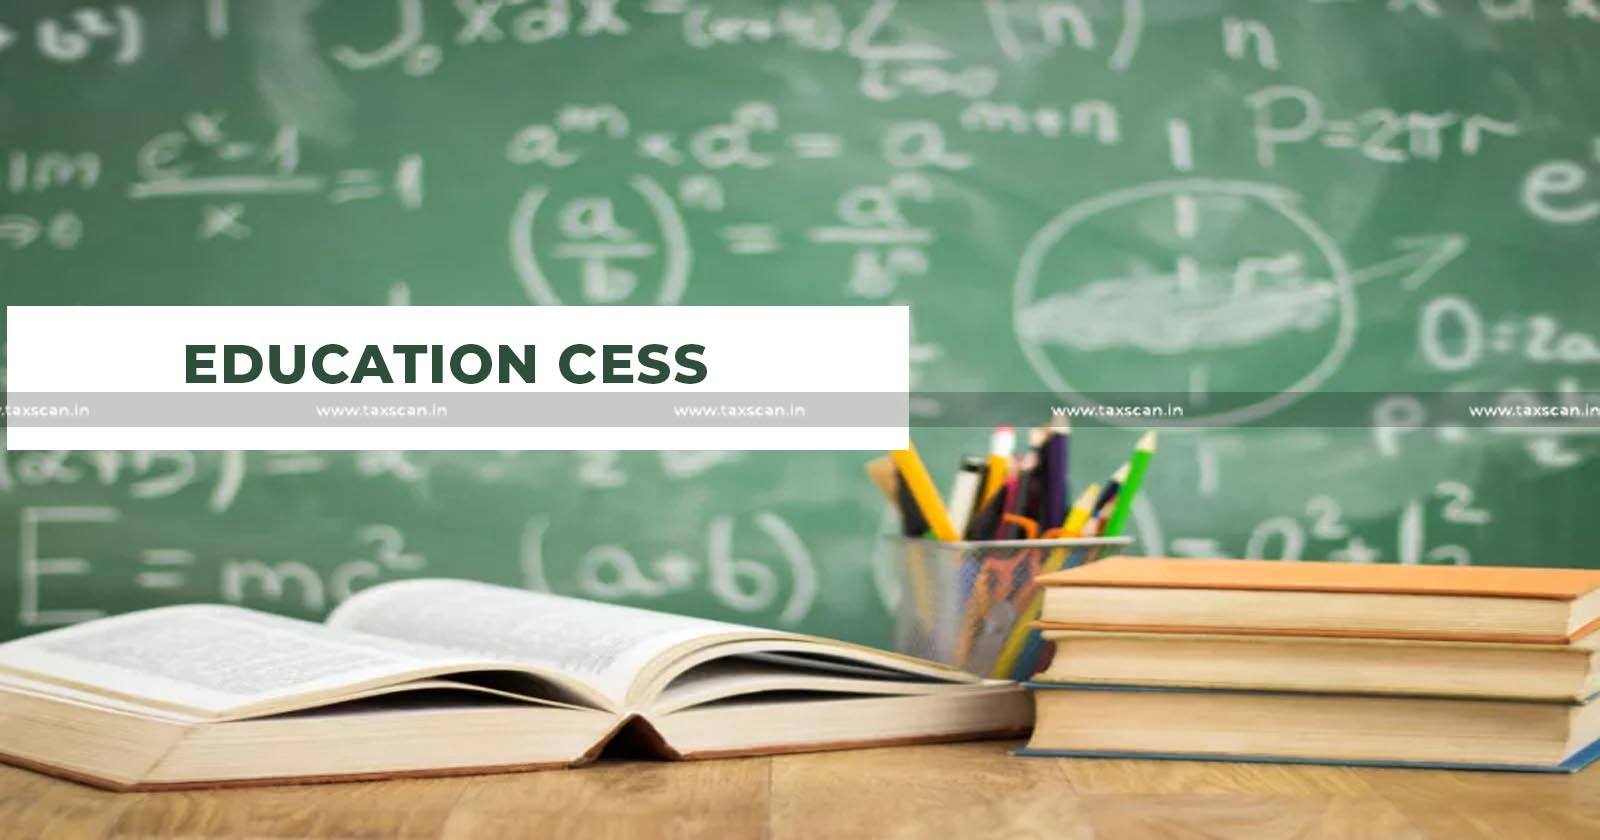 Education Cess - Secondary Education Cess - Higher Secondary Education Cess - Deduction - ITAT - taxscan